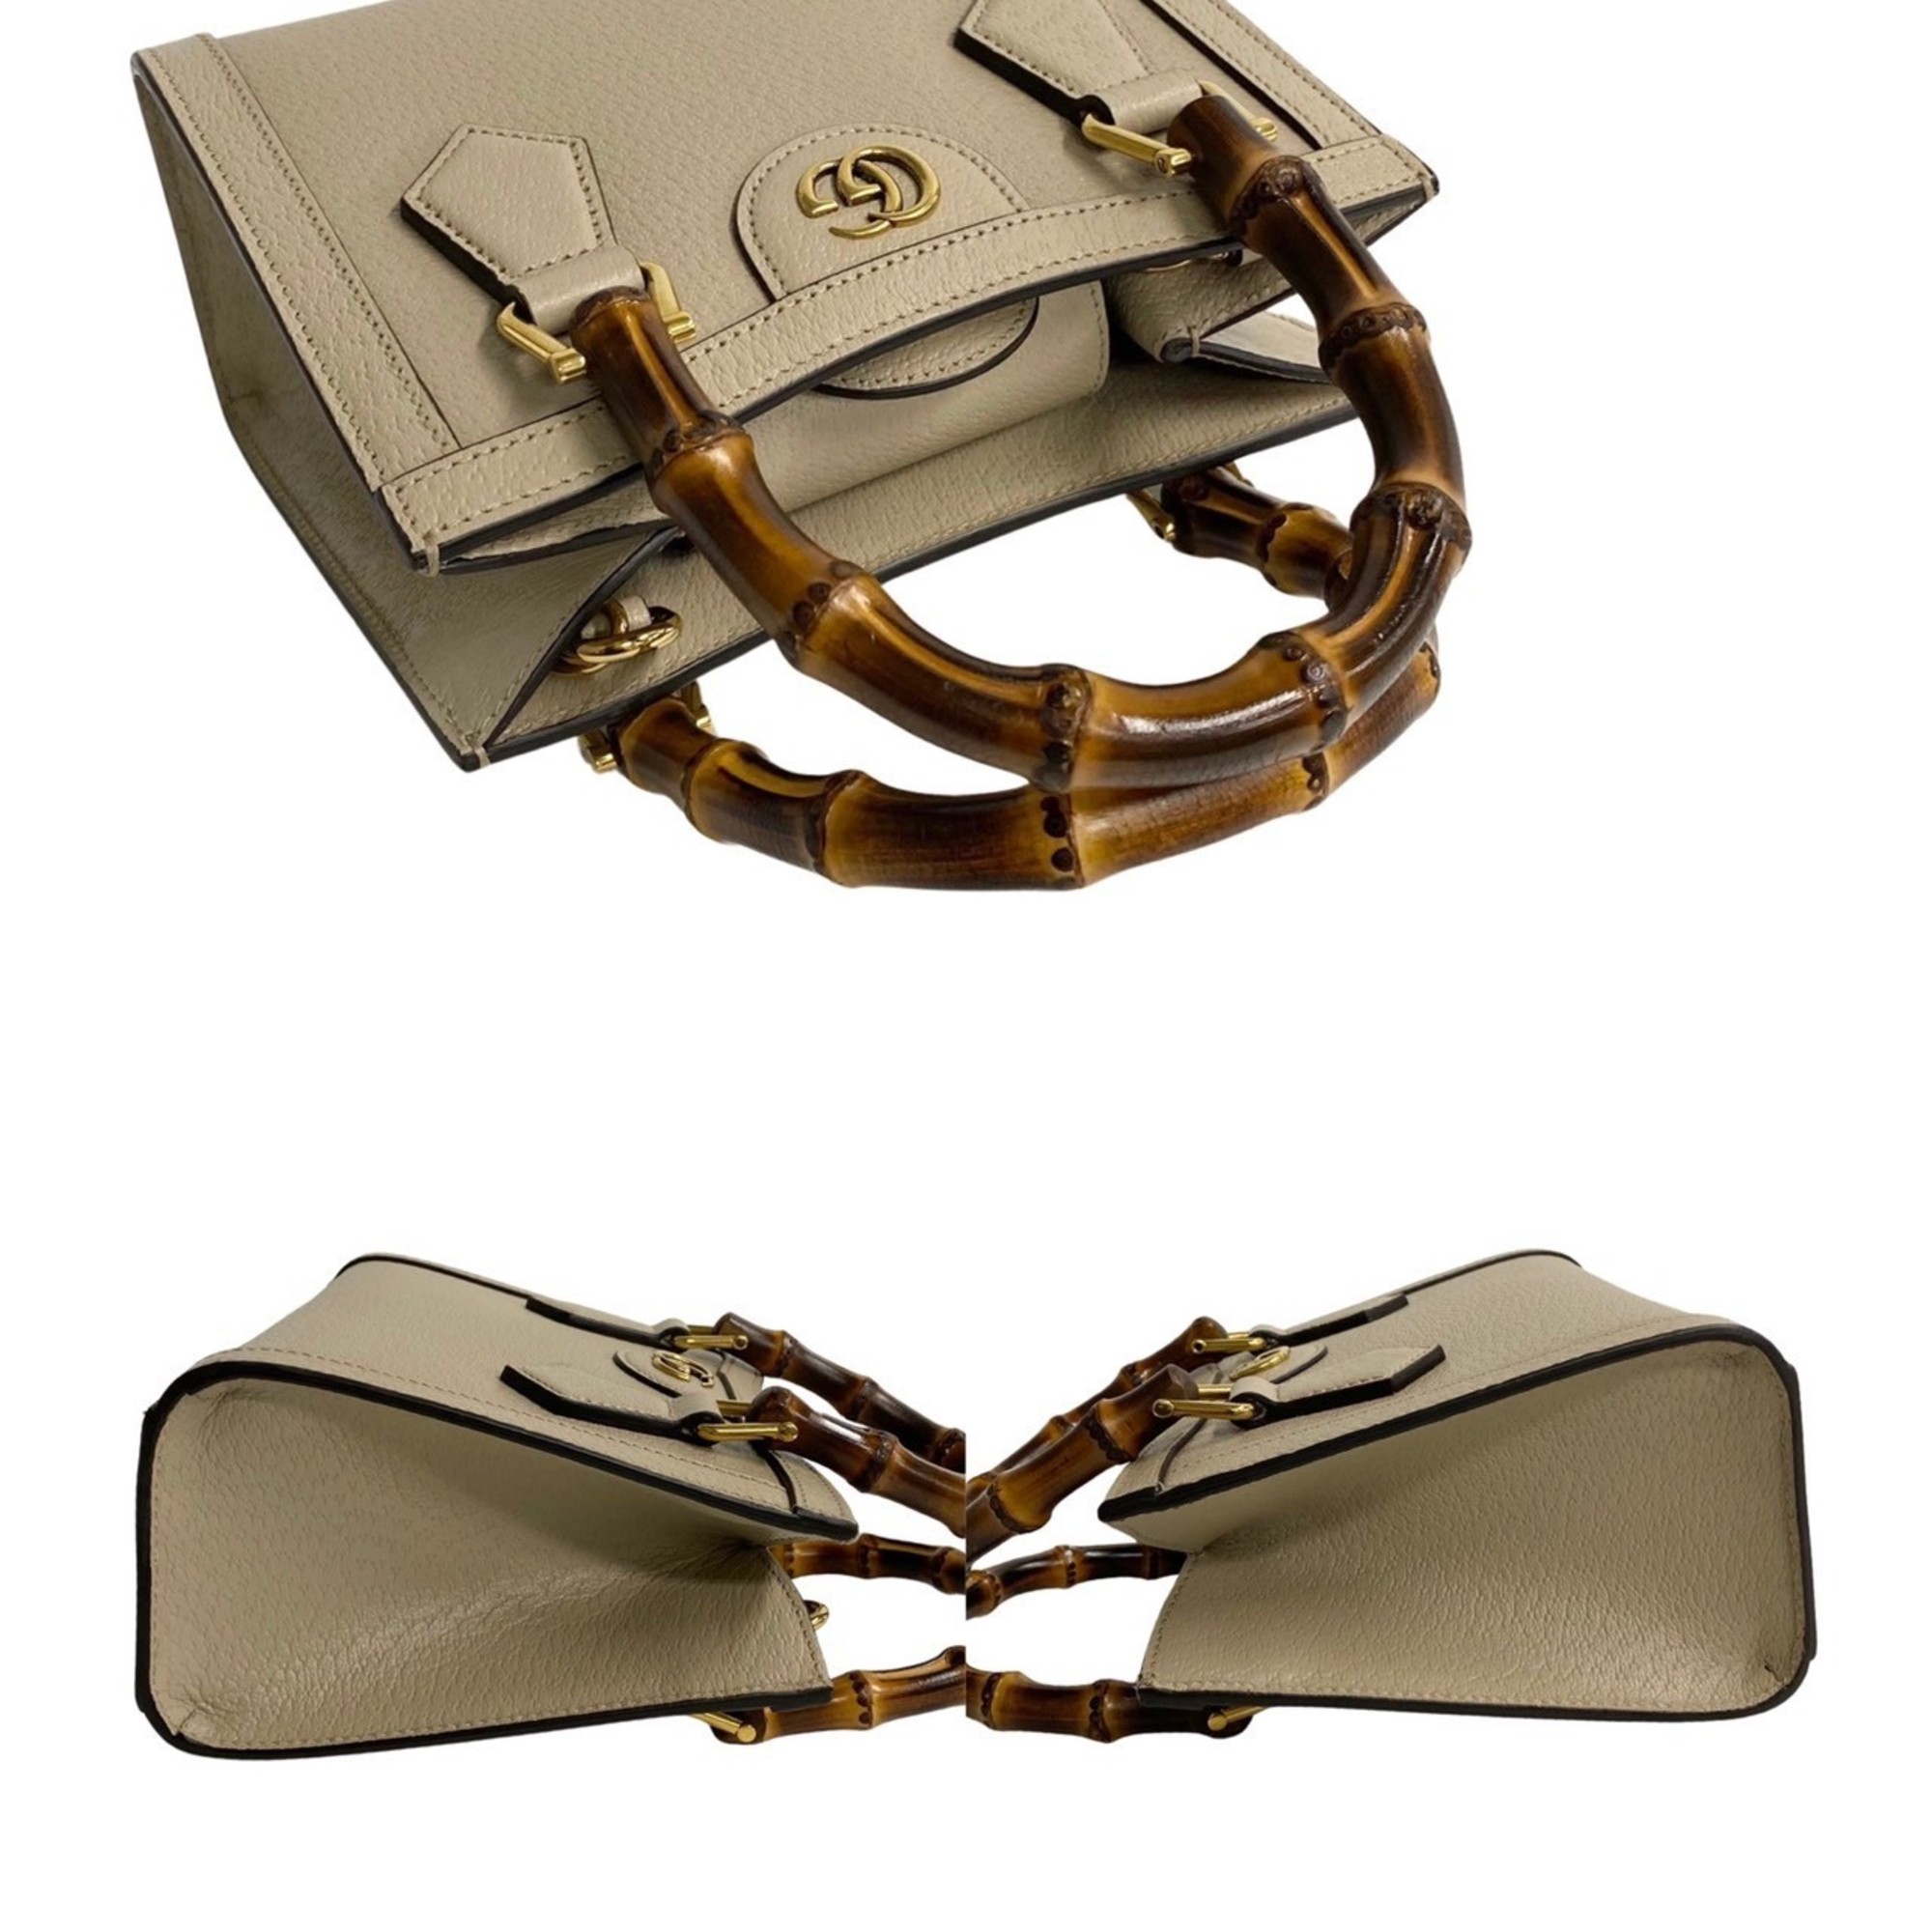 GUCCI Diana Tote Bamboo Leather 2way Handbag Shoulder Bag Beige 17931